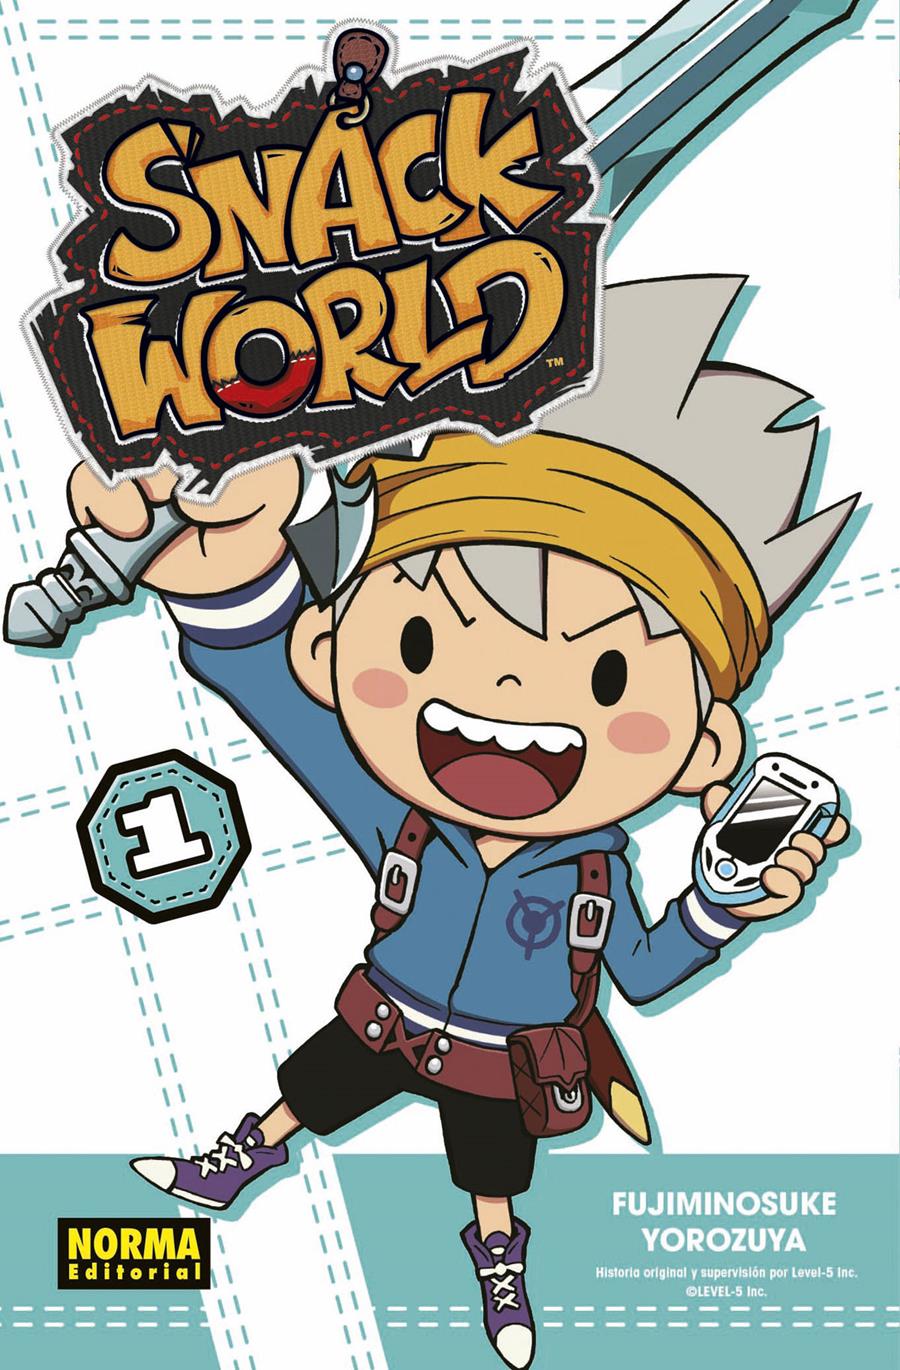 Snack world 01 | N1220-NOR23 | Fujiminosuke Yorozuya, Level-5 | Terra de Còmic - Tu tienda de cómics online especializada en cómics, manga y merchandising